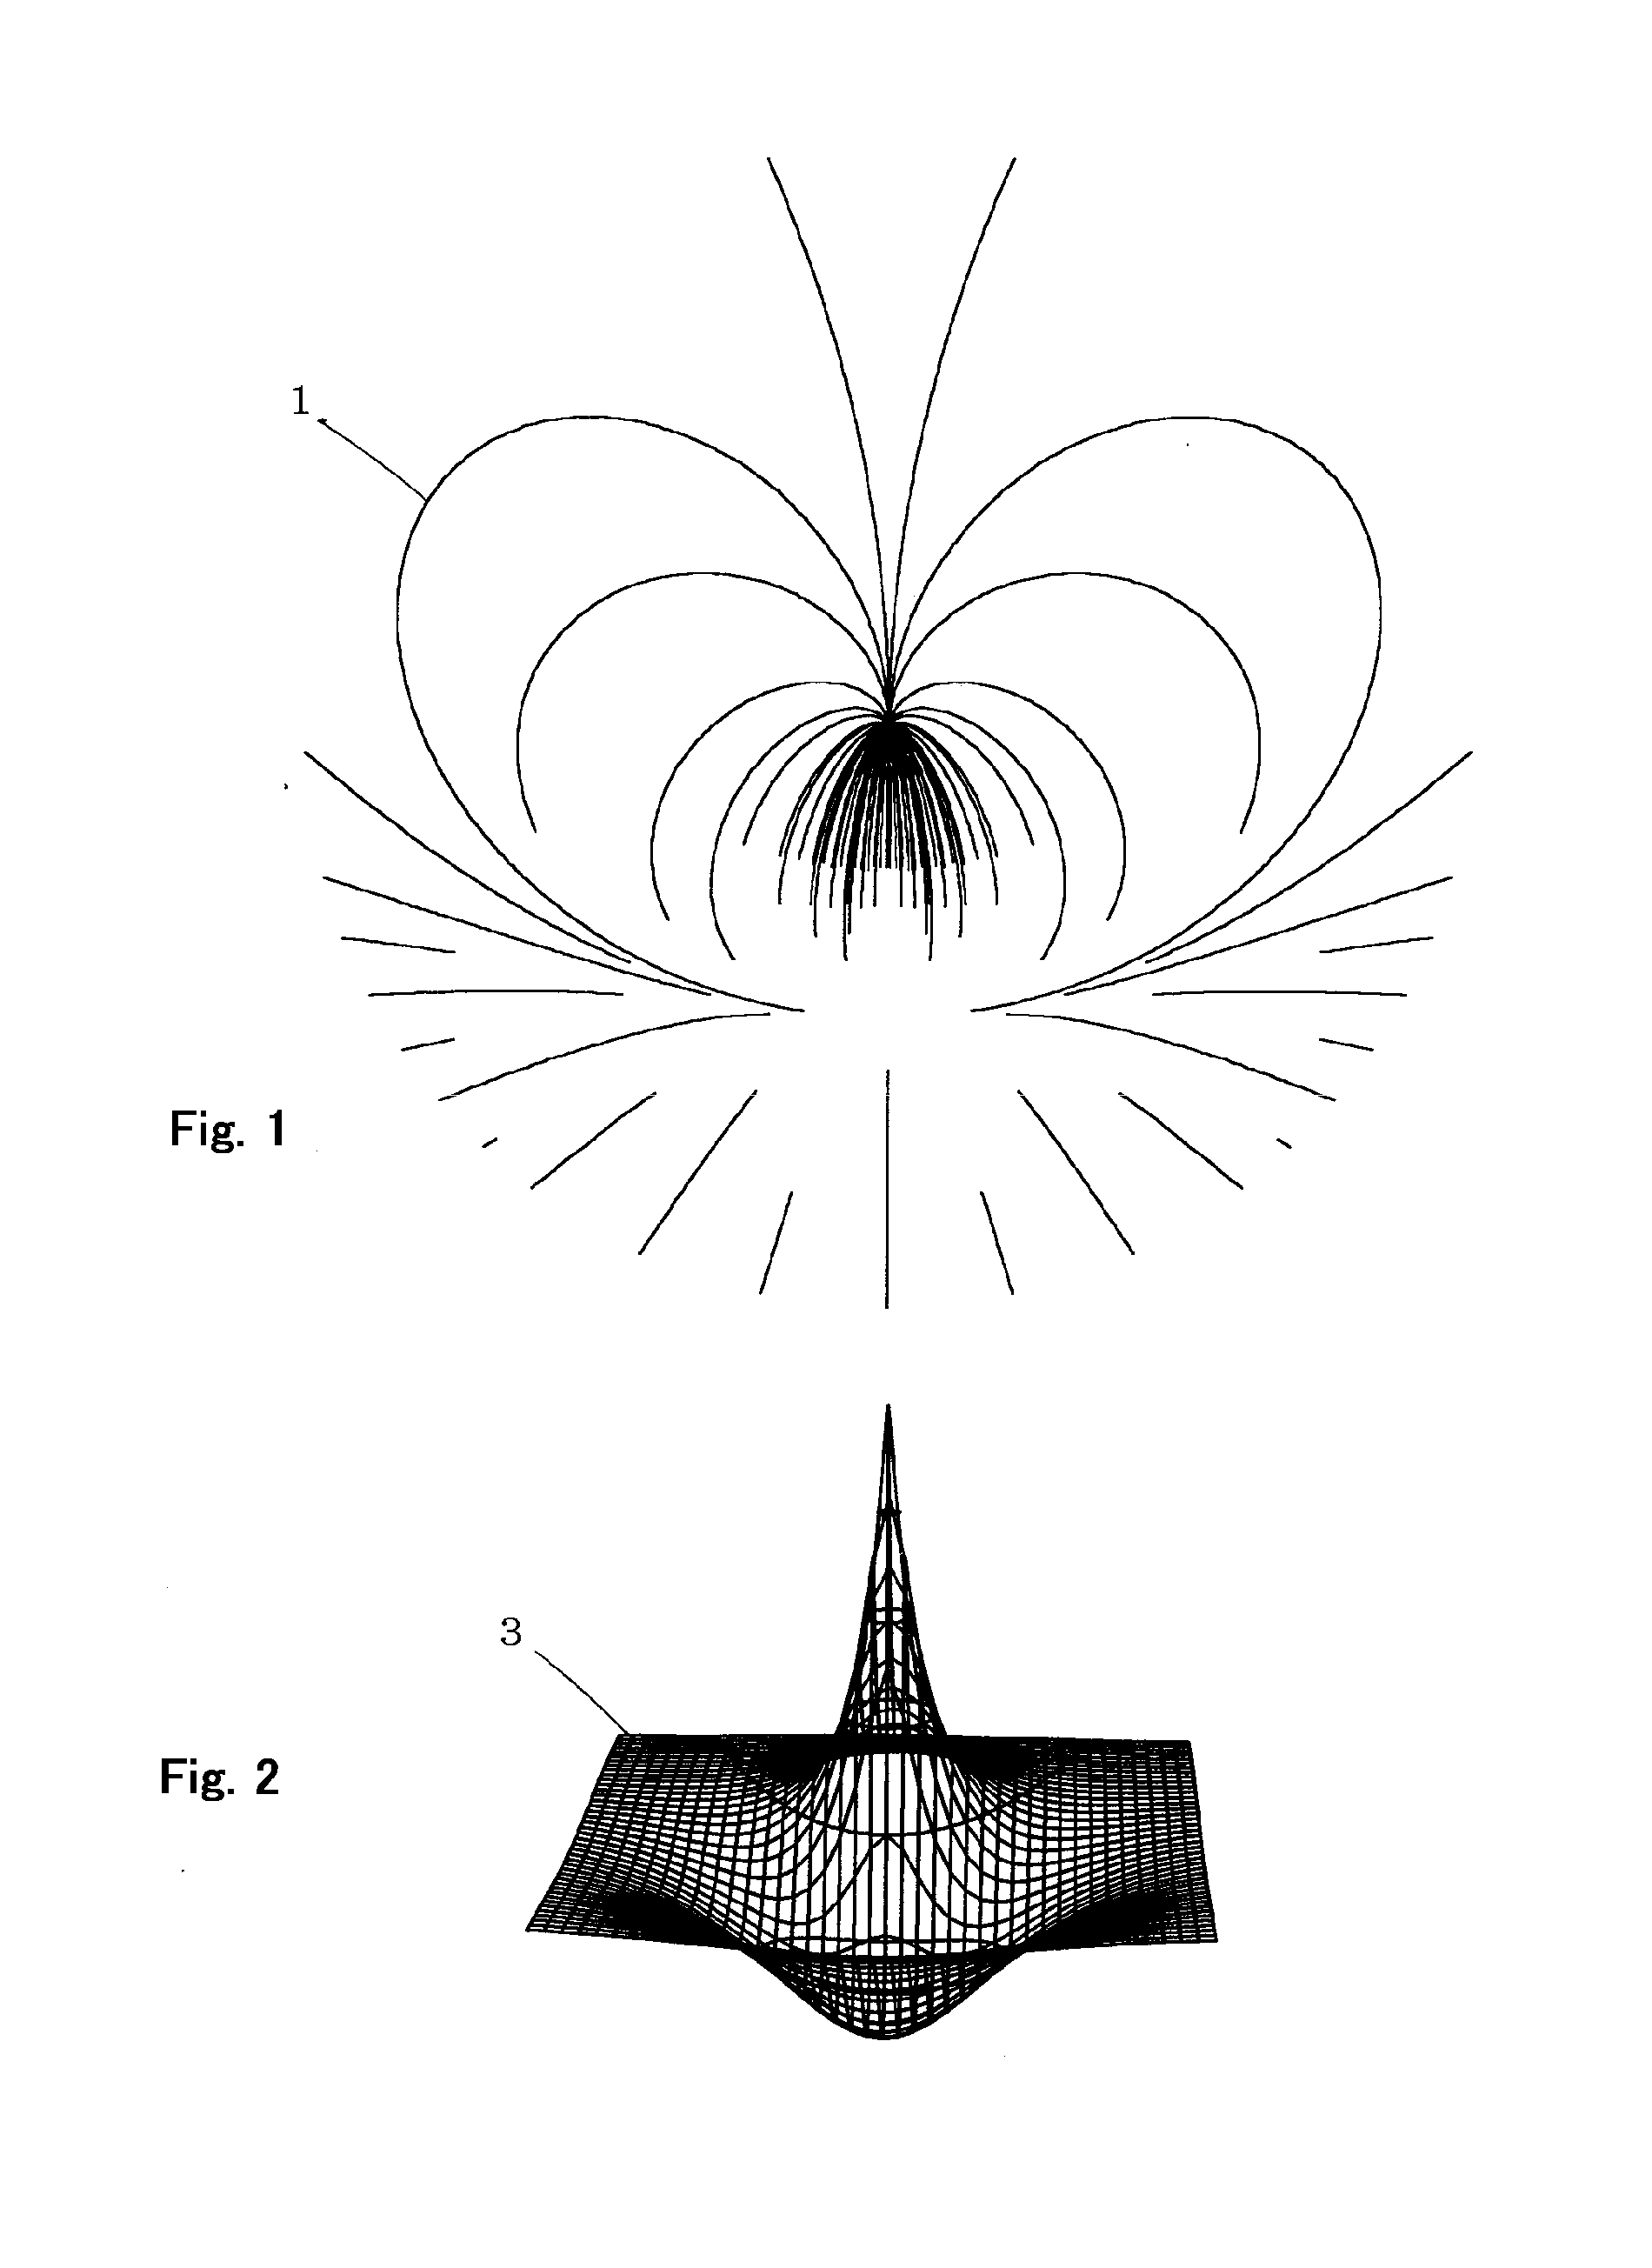 Method of displaying electromagnetic field in hydrogen atom